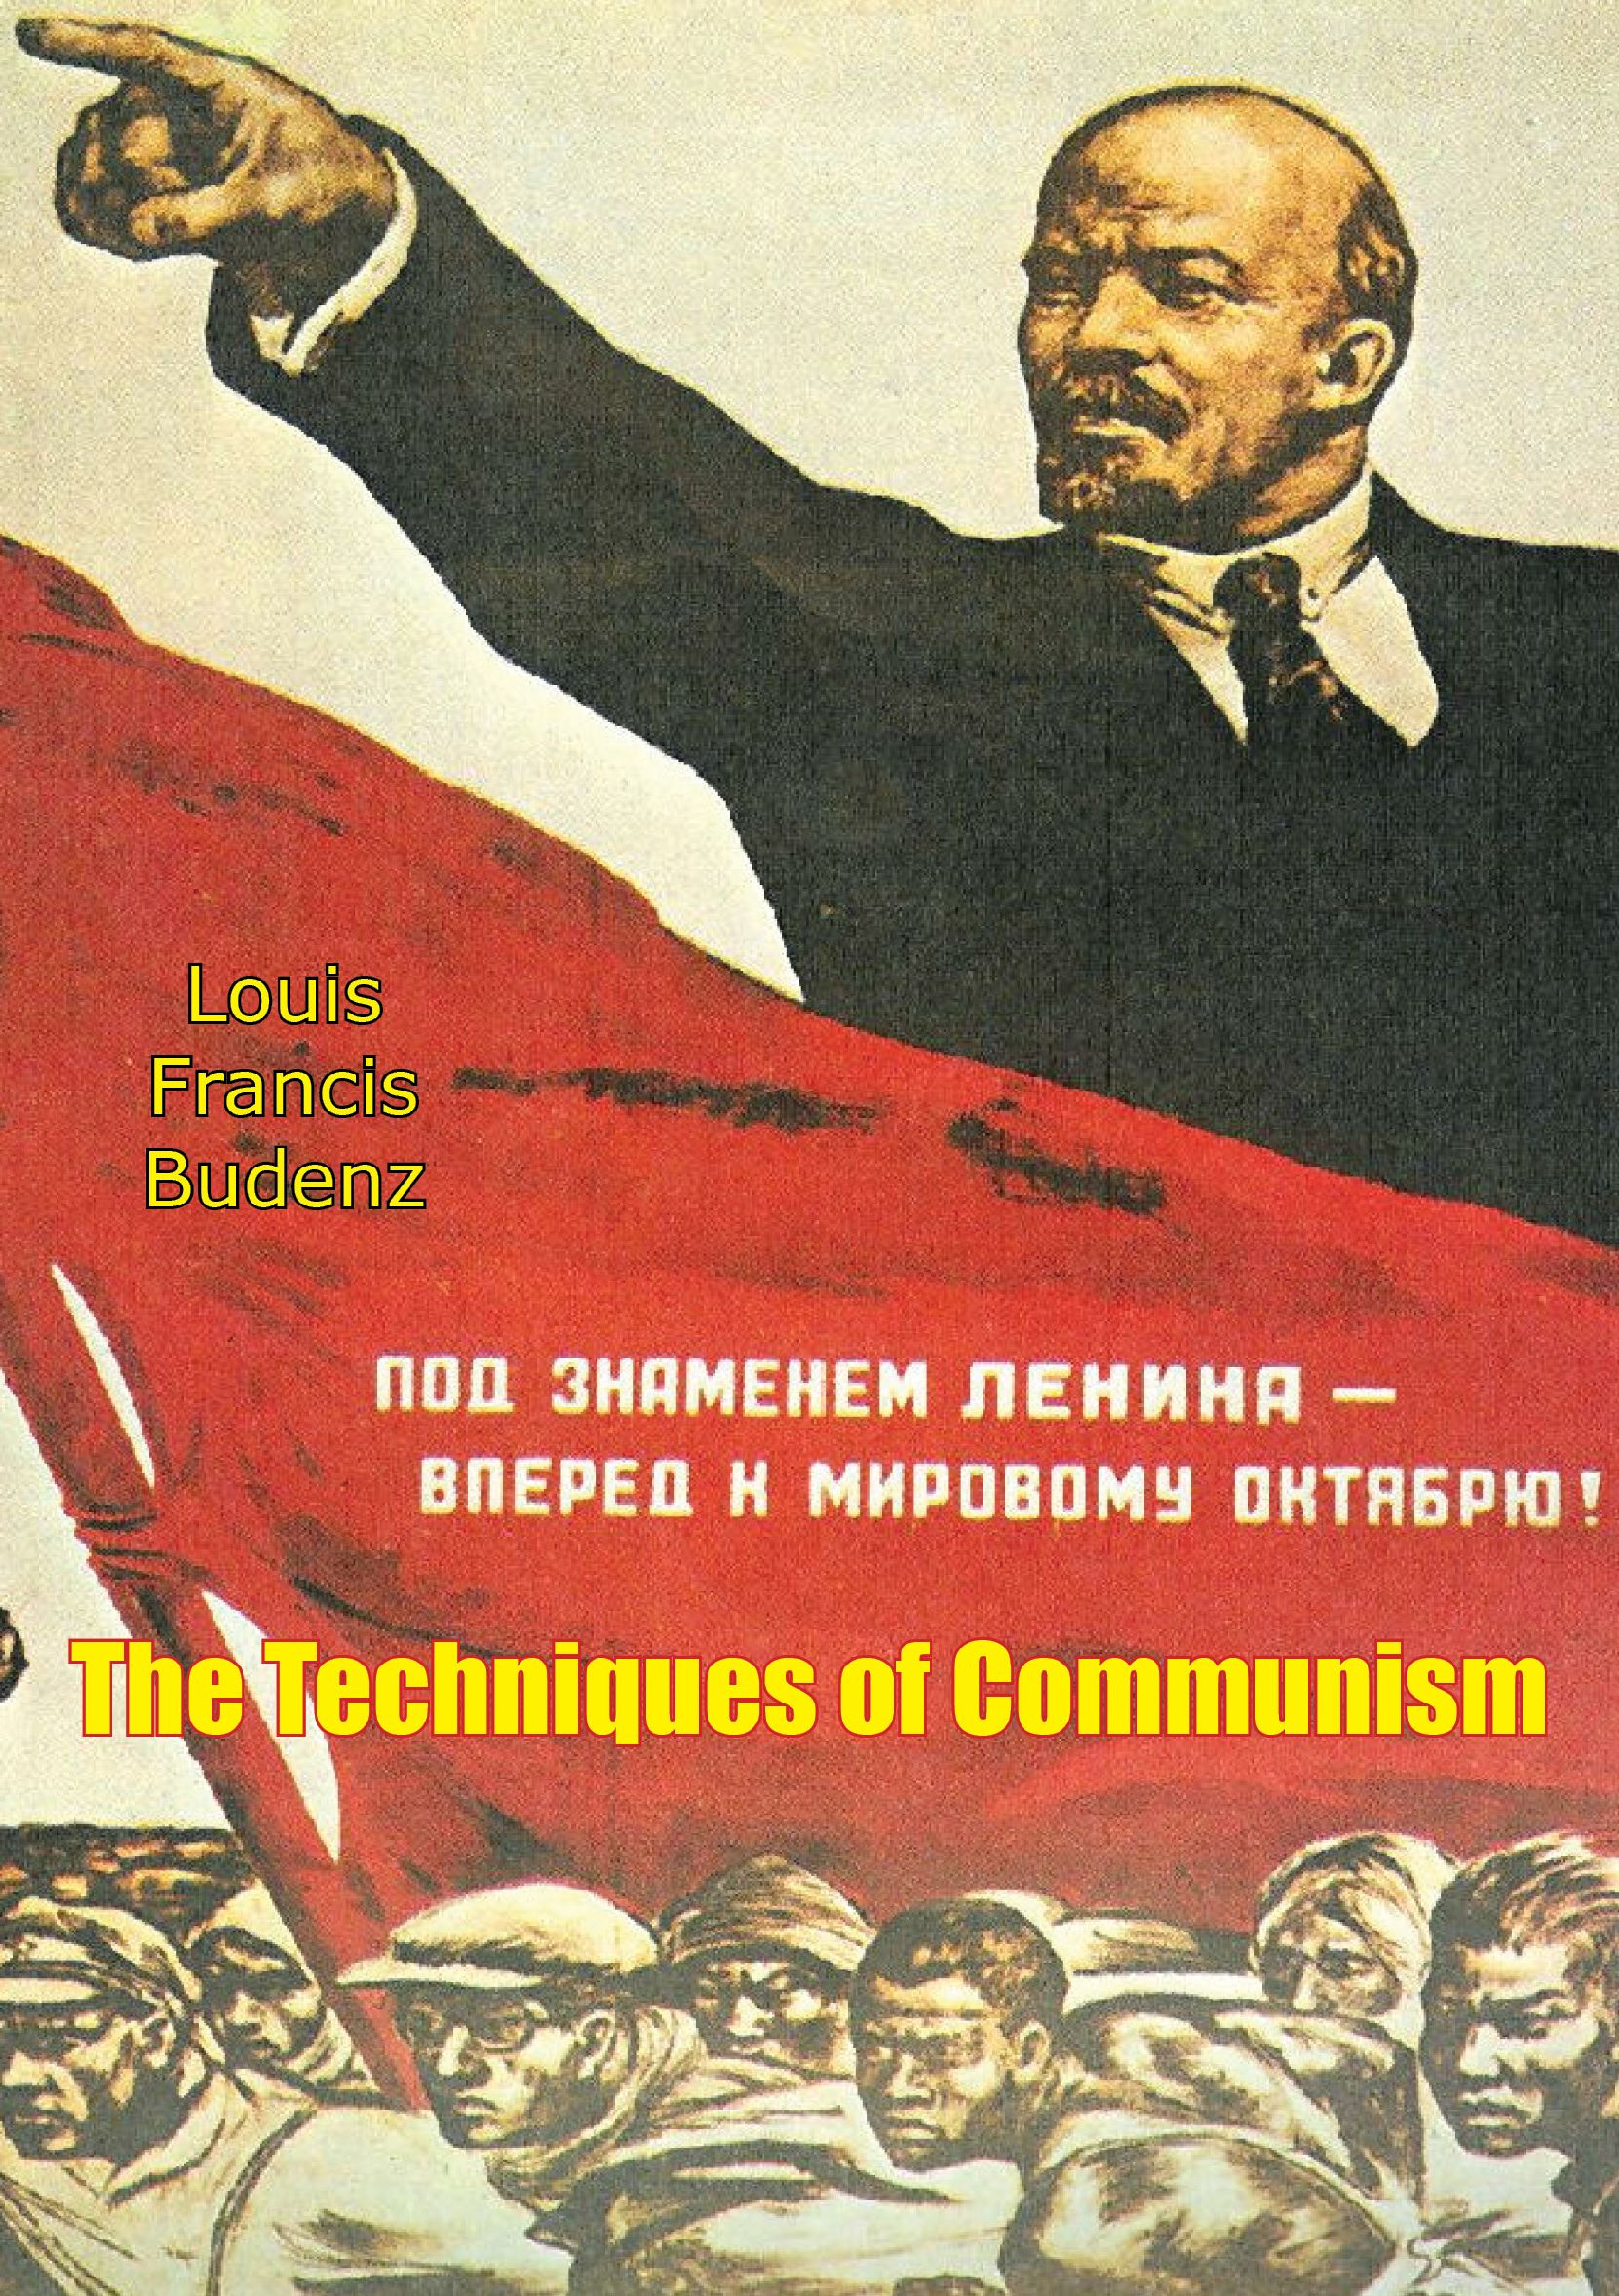 The Techniques of Communism